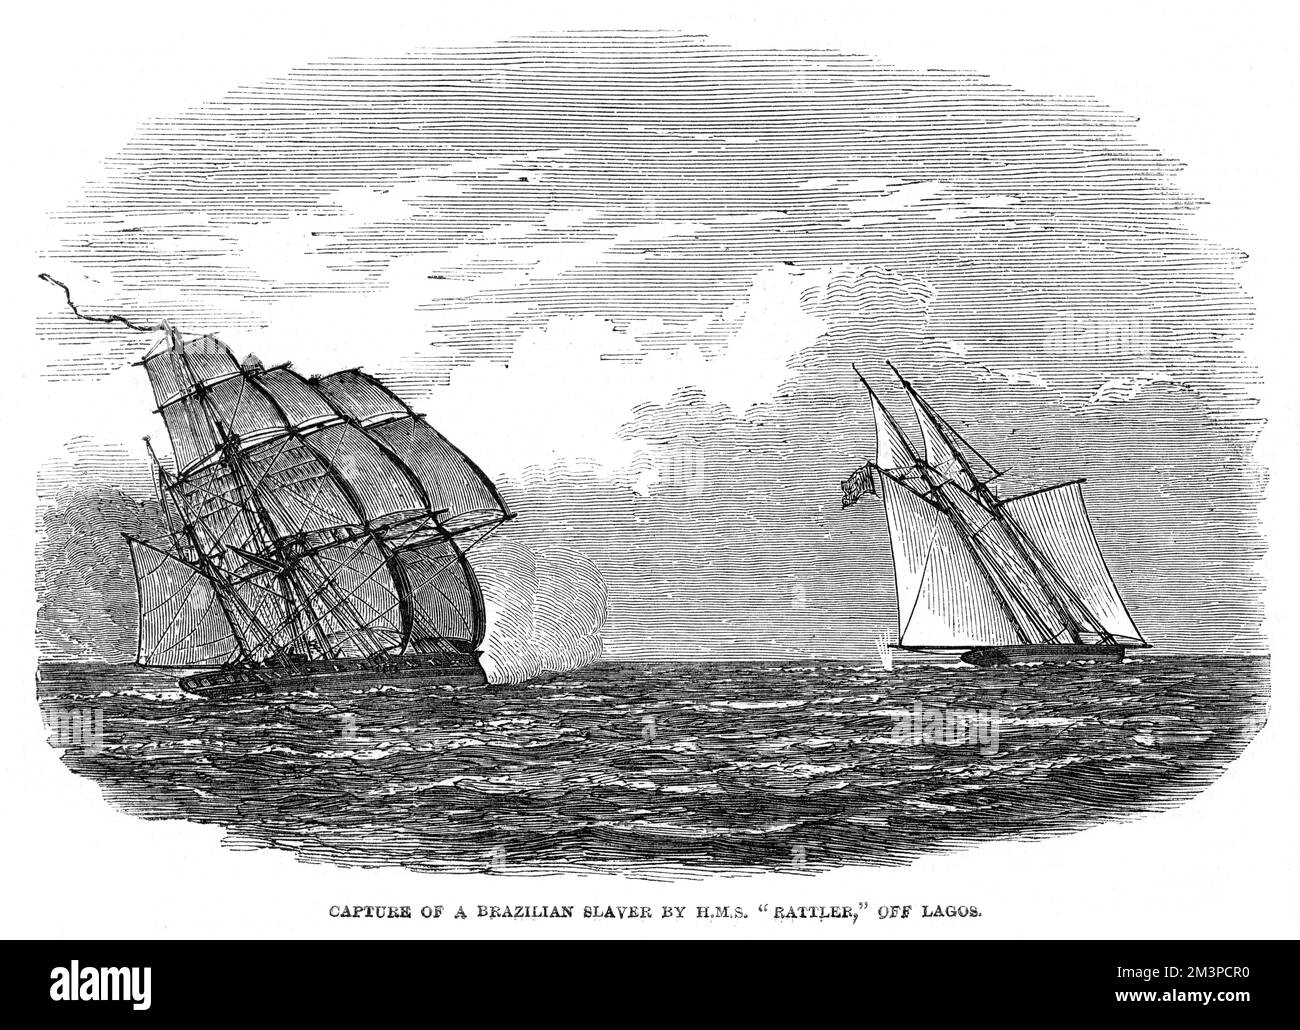 Capture of a Brazilian slaver, Andorinha, by British ship HMS Rattler off Lagos, Nigeria, western coast of Africa.     Date: 1849 Stock Photo